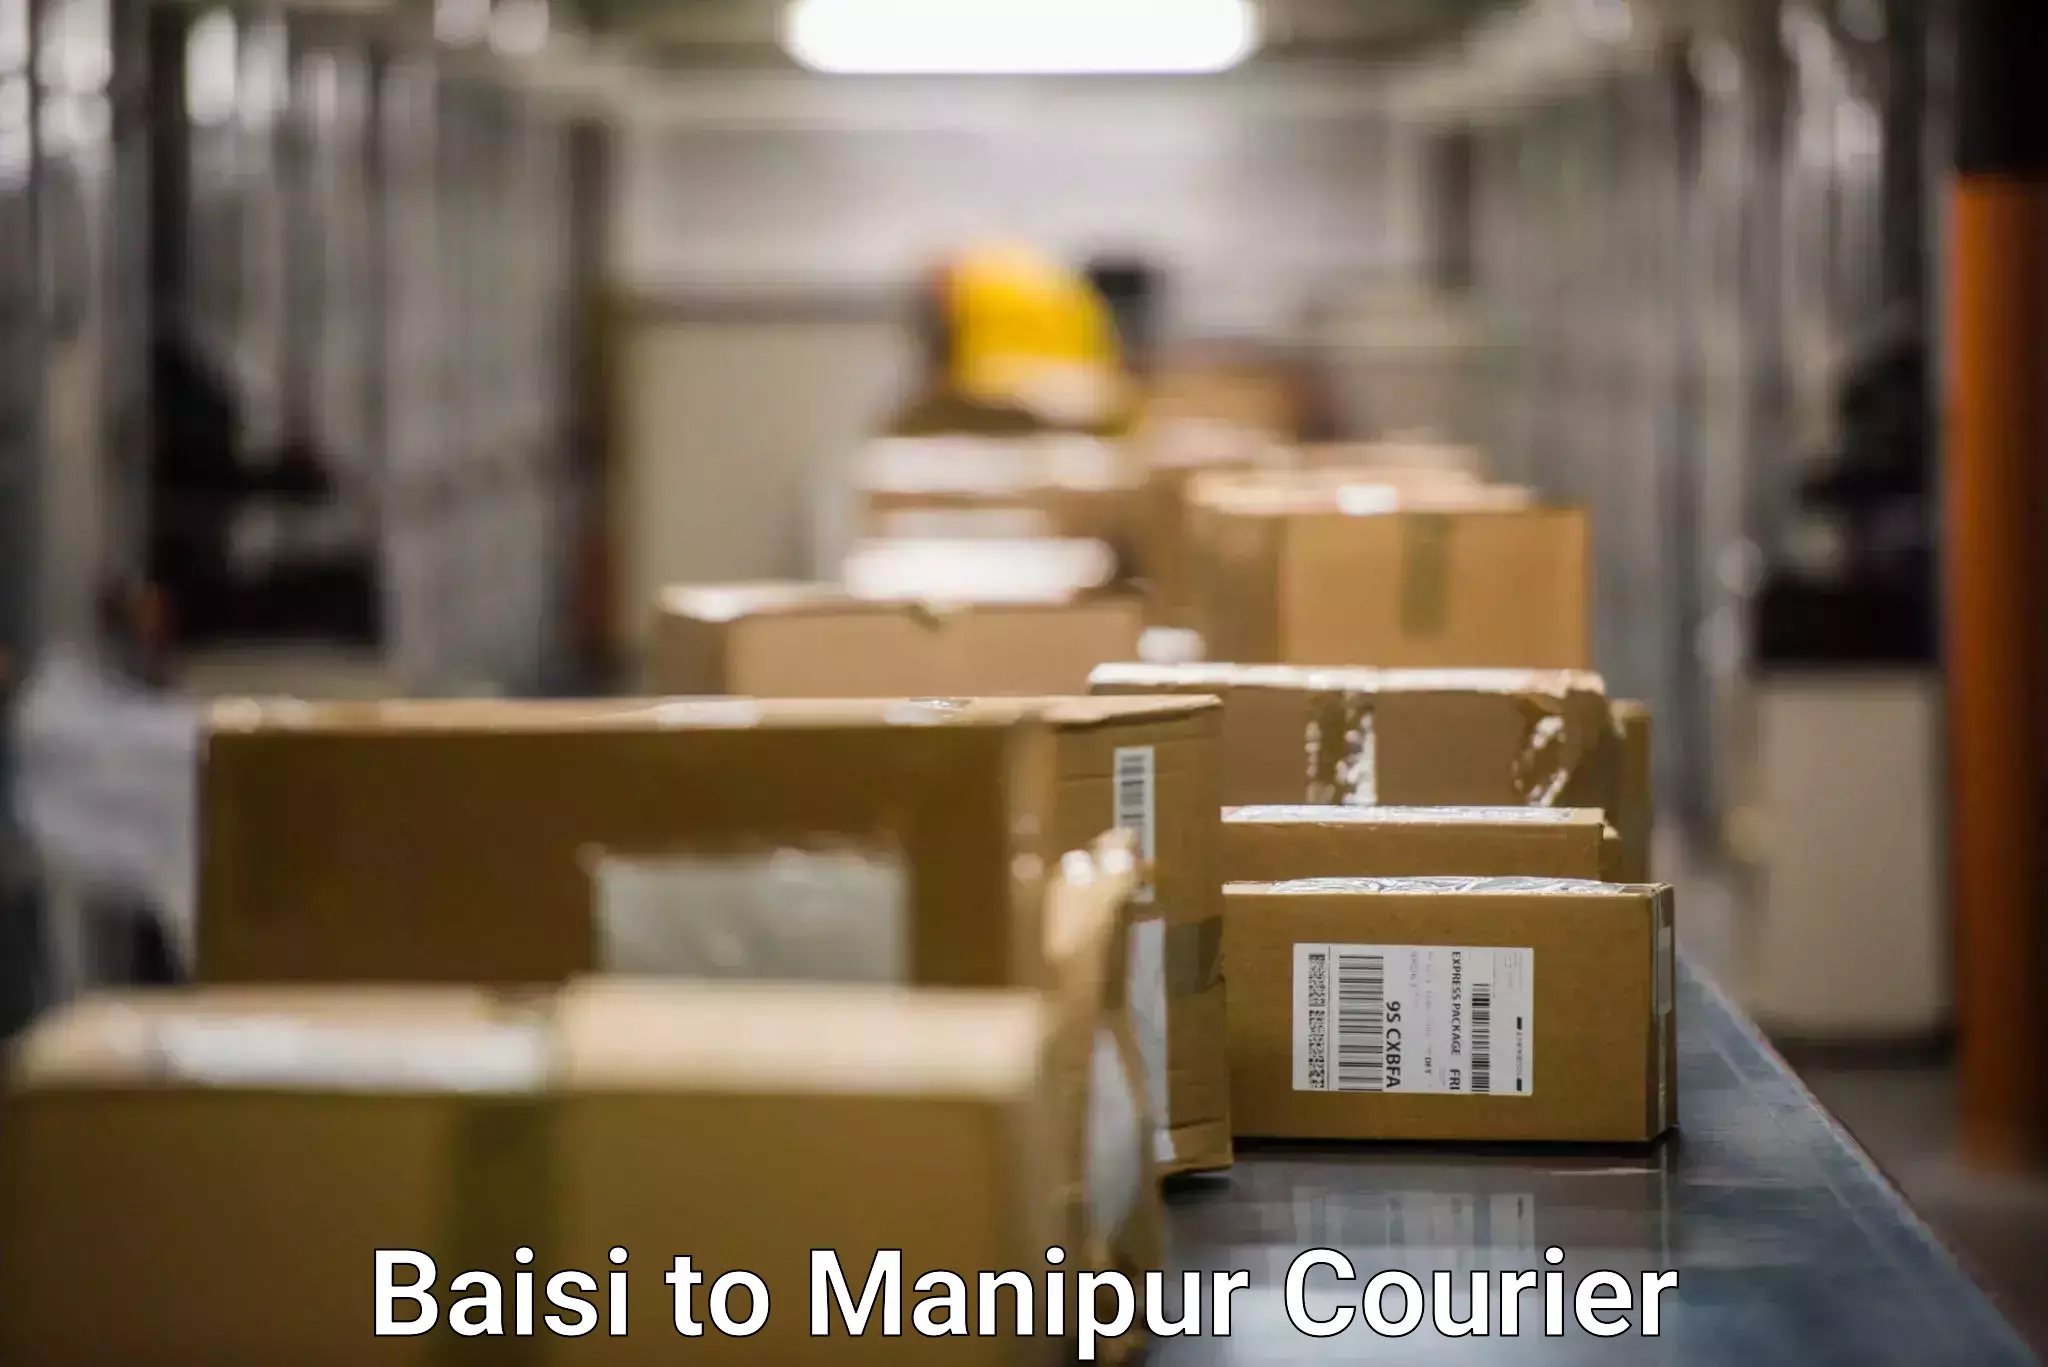 Logistics service provider Baisi to Manipur